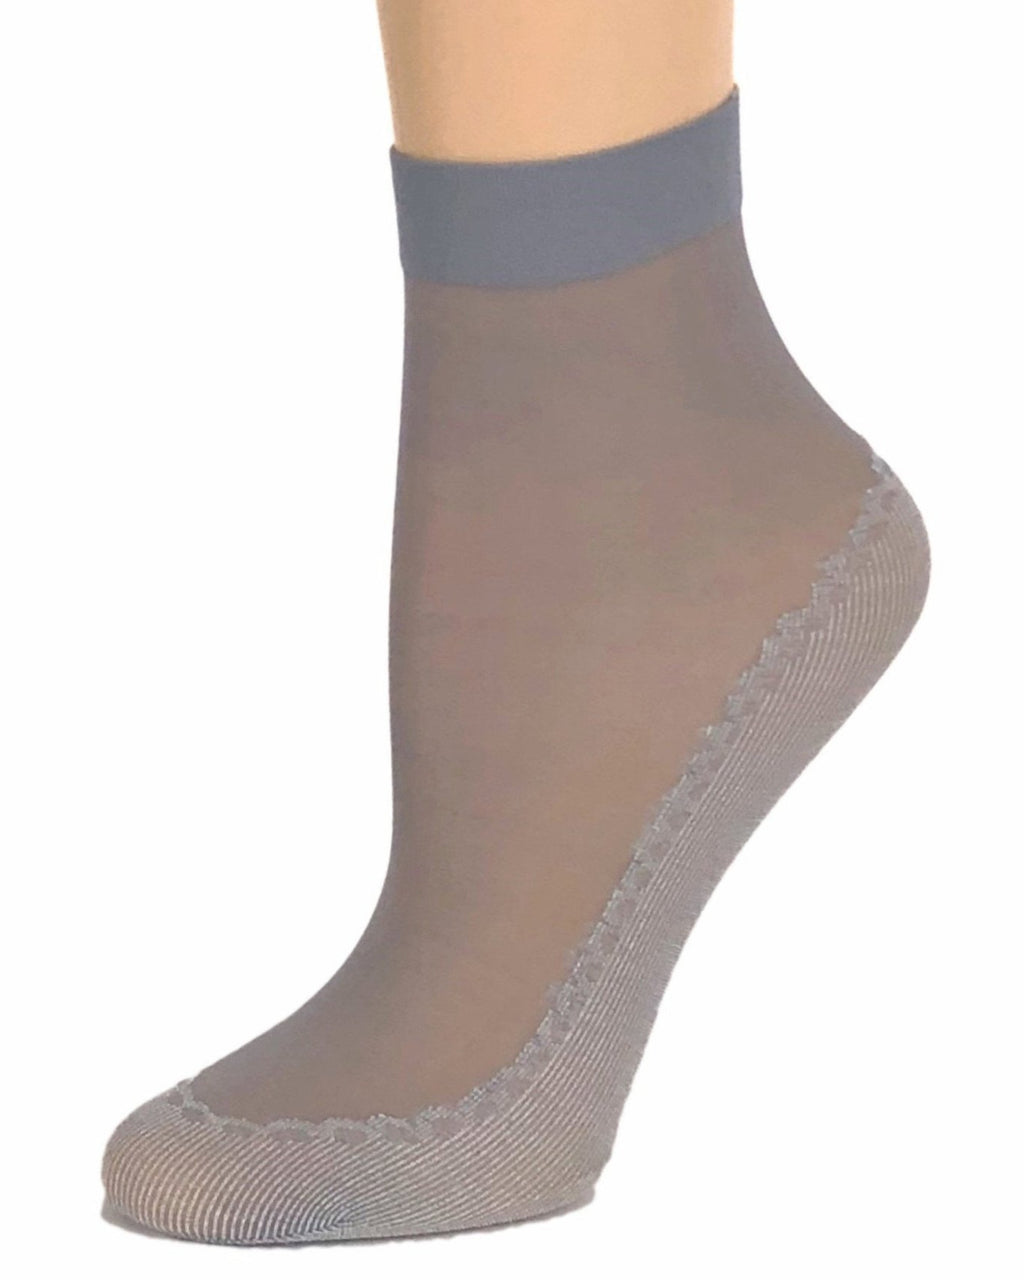 Classy Grey Sheer Socks - Global Trendz Fashion®